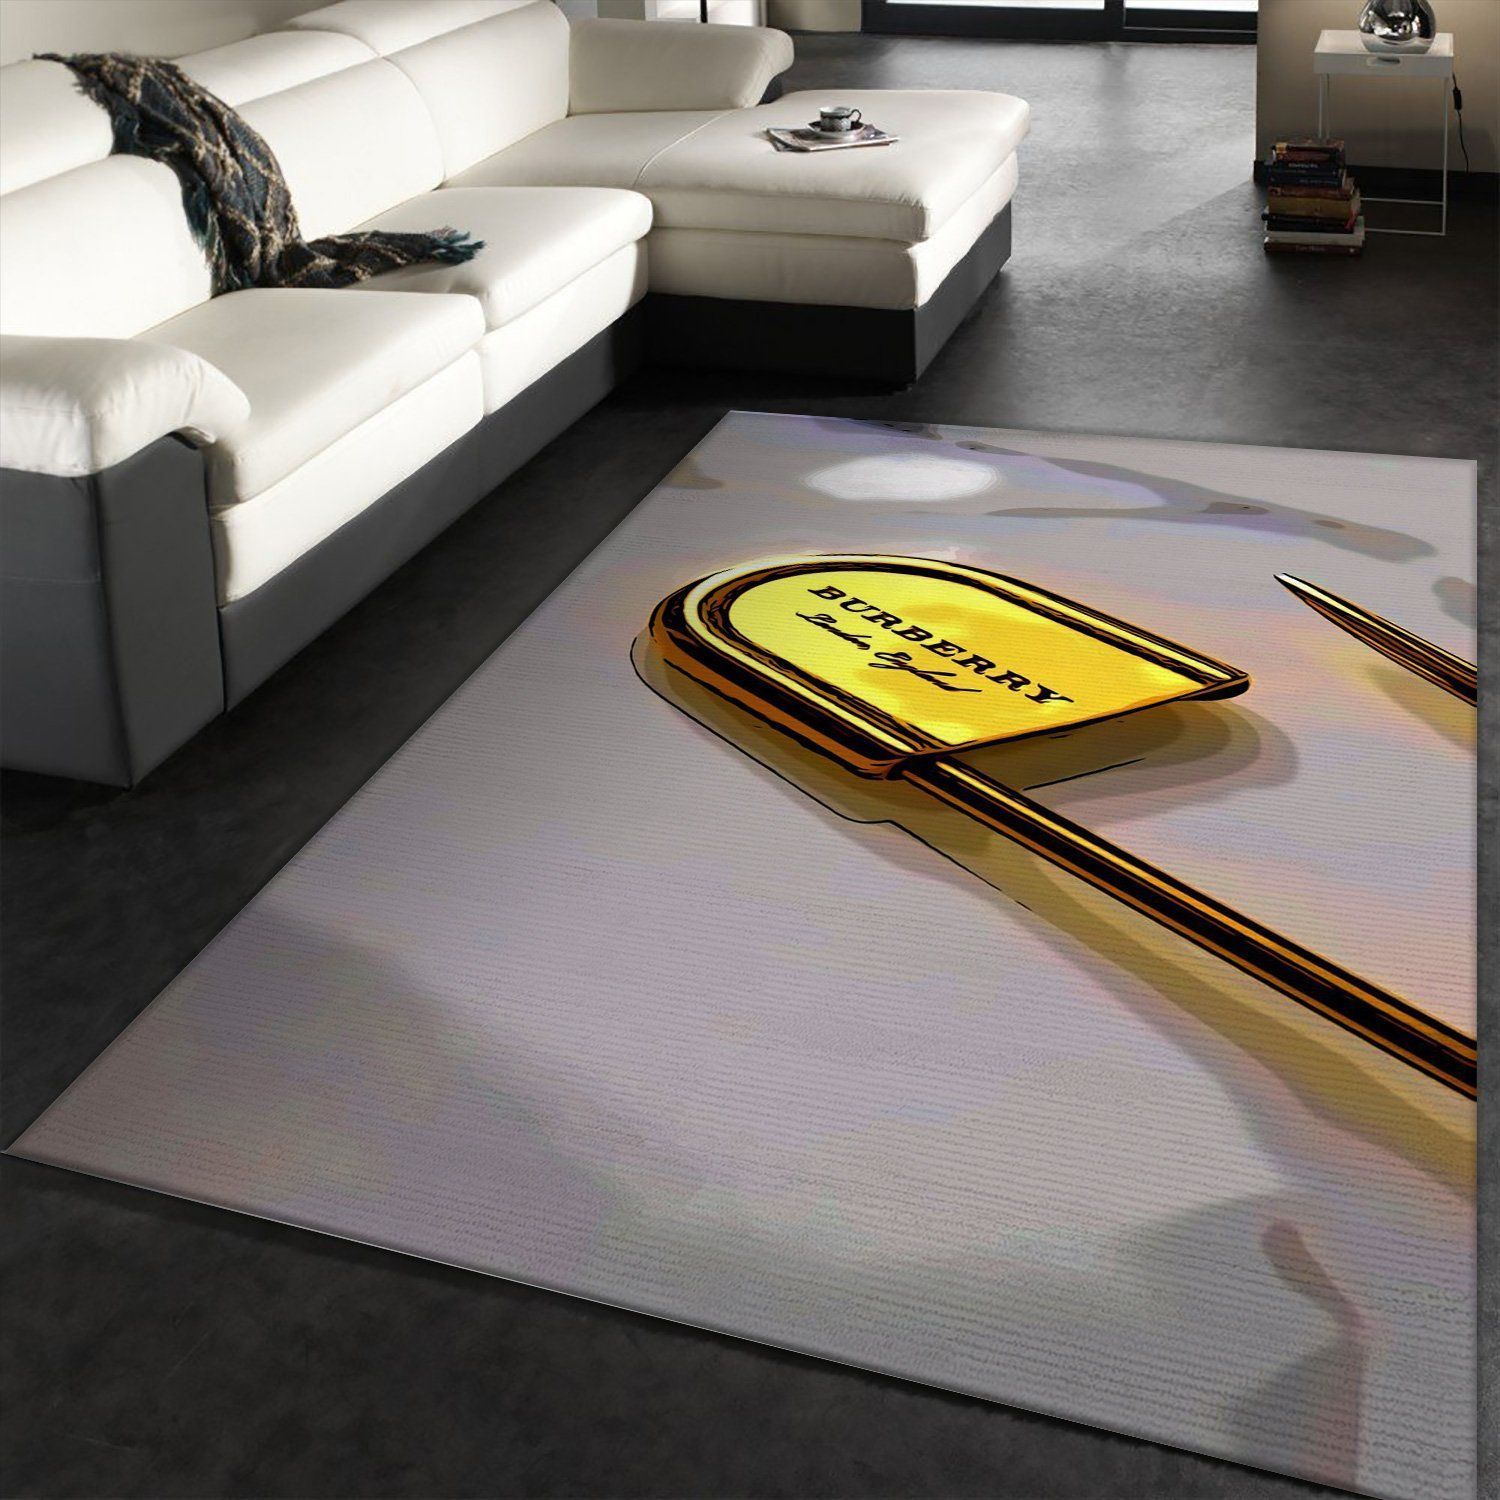 Burberry Rug Fashion Brand Rug Home Decor Floor Decor - Indoor Outdoor Rugs